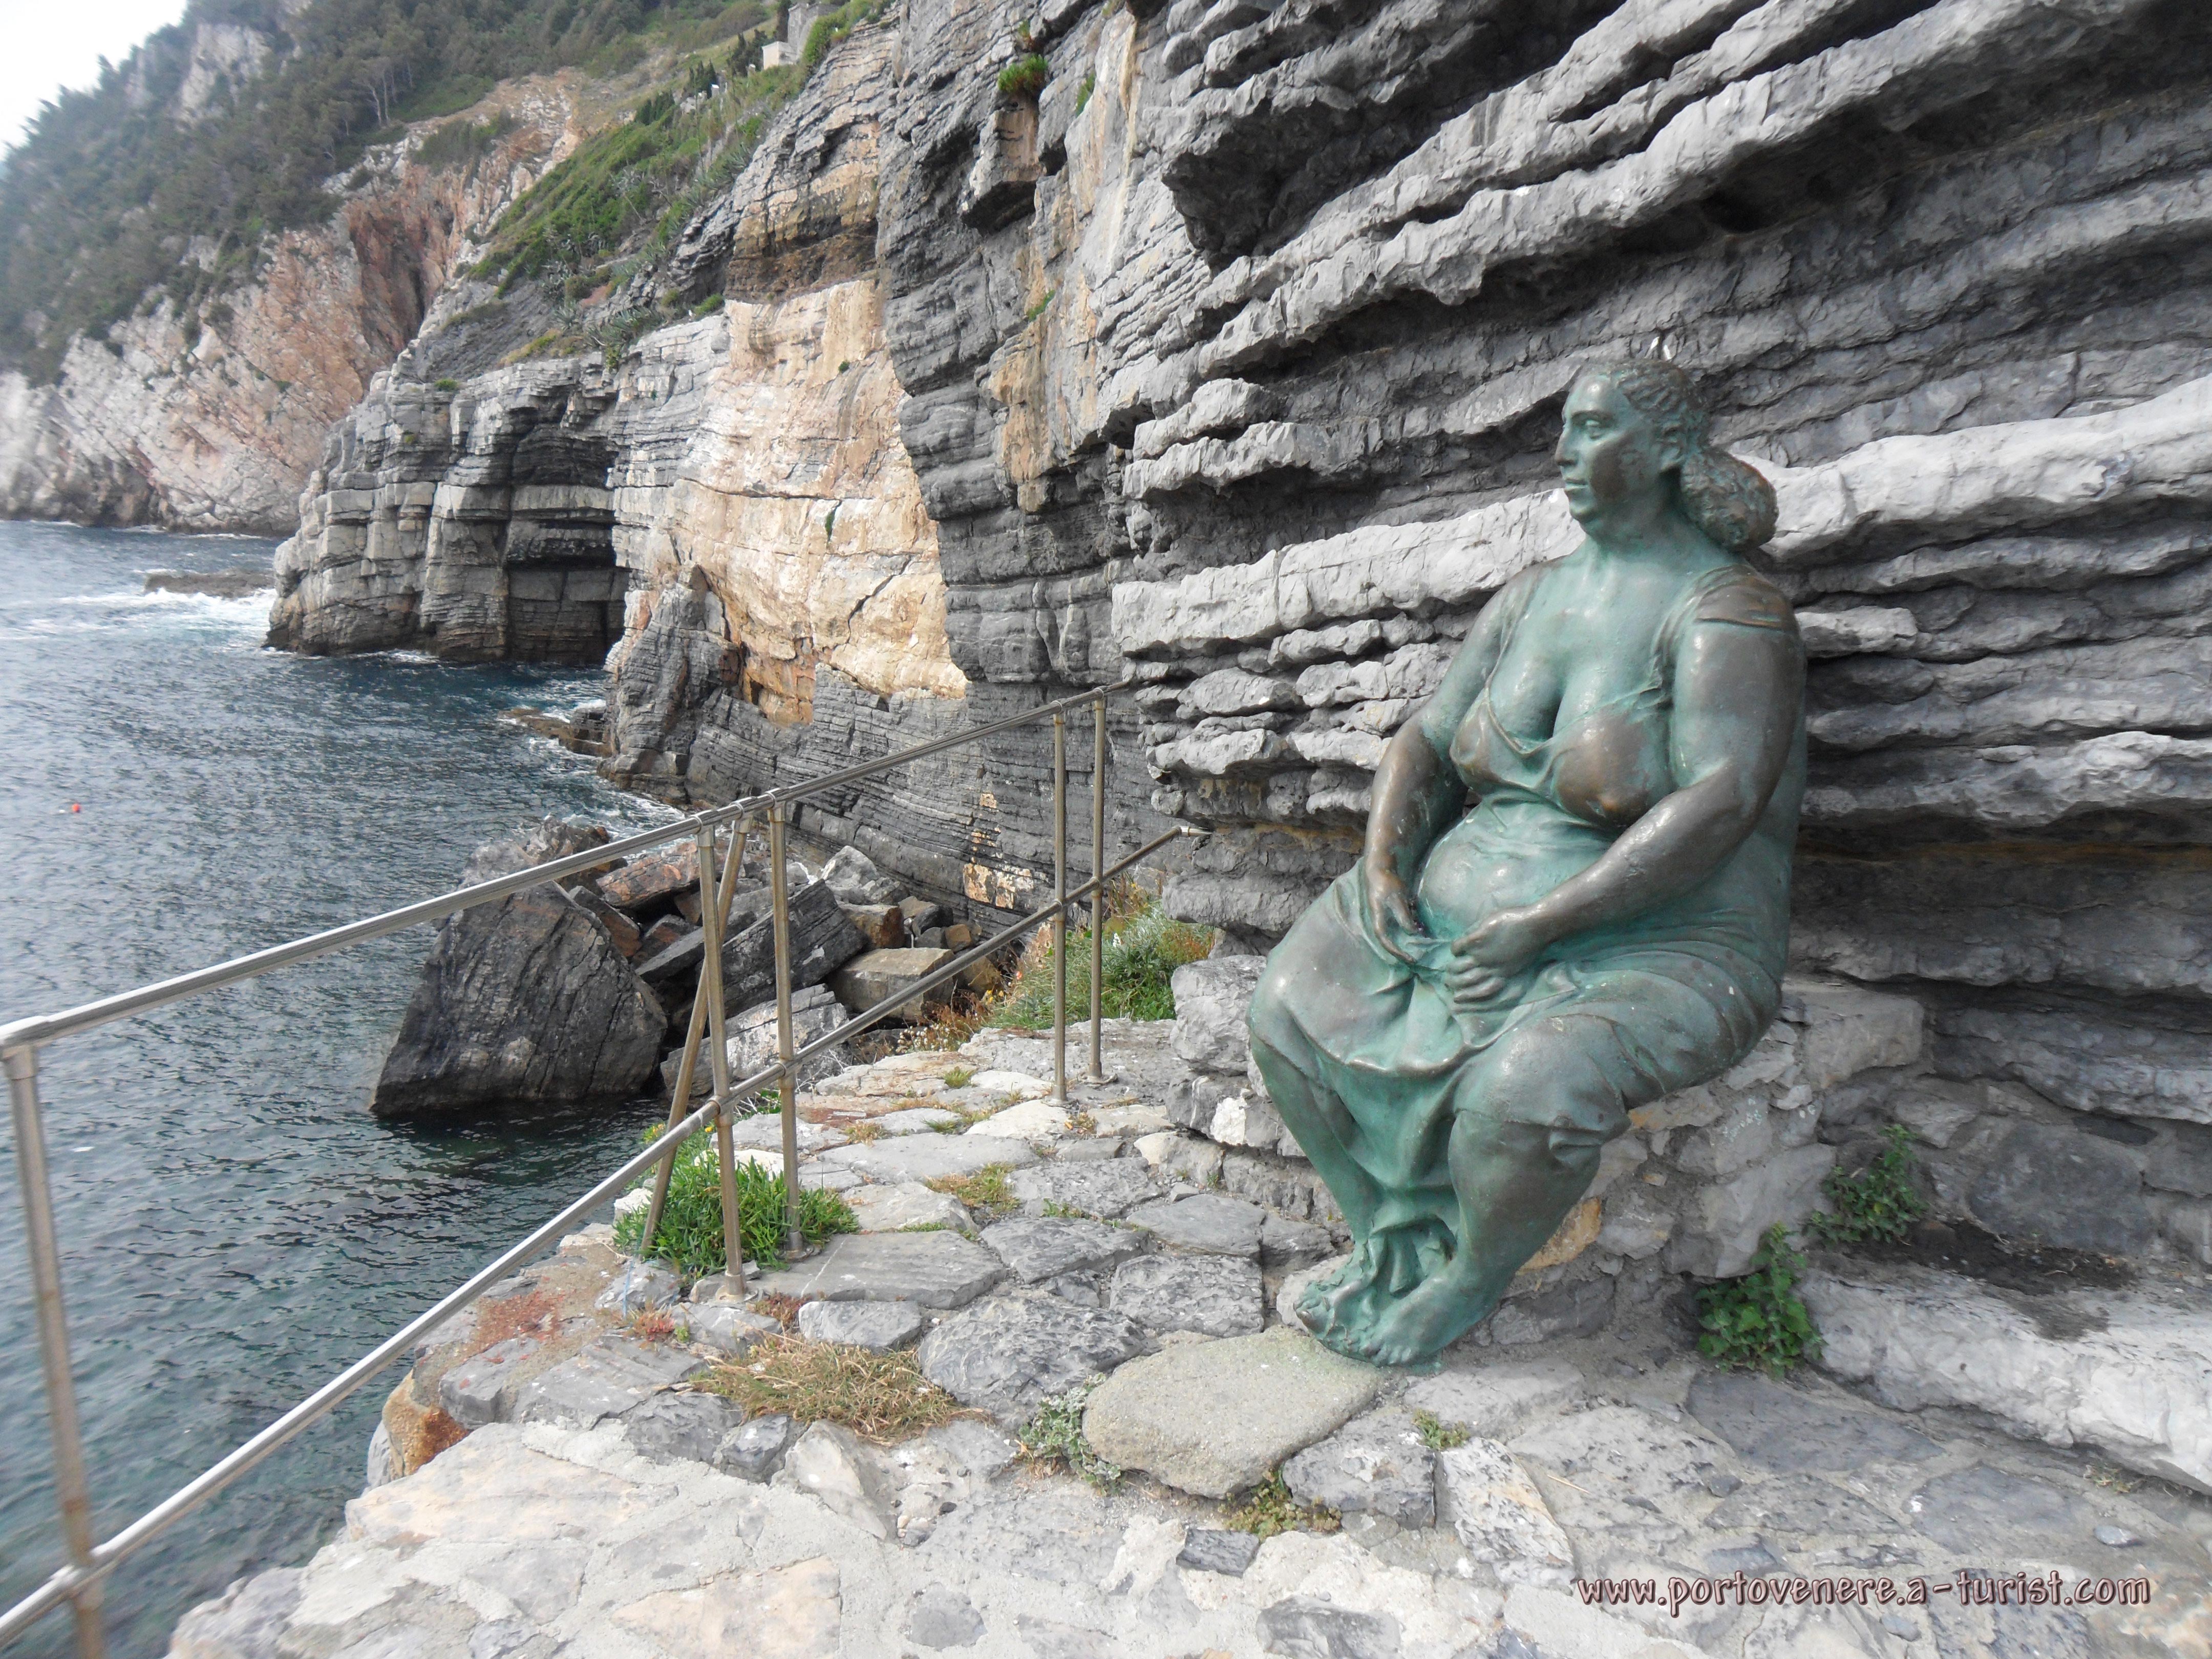 Portovenere, Mater Naturae - Tribute to the town of sculptor Scorzelli<br>4320x3240, 2.16 MB